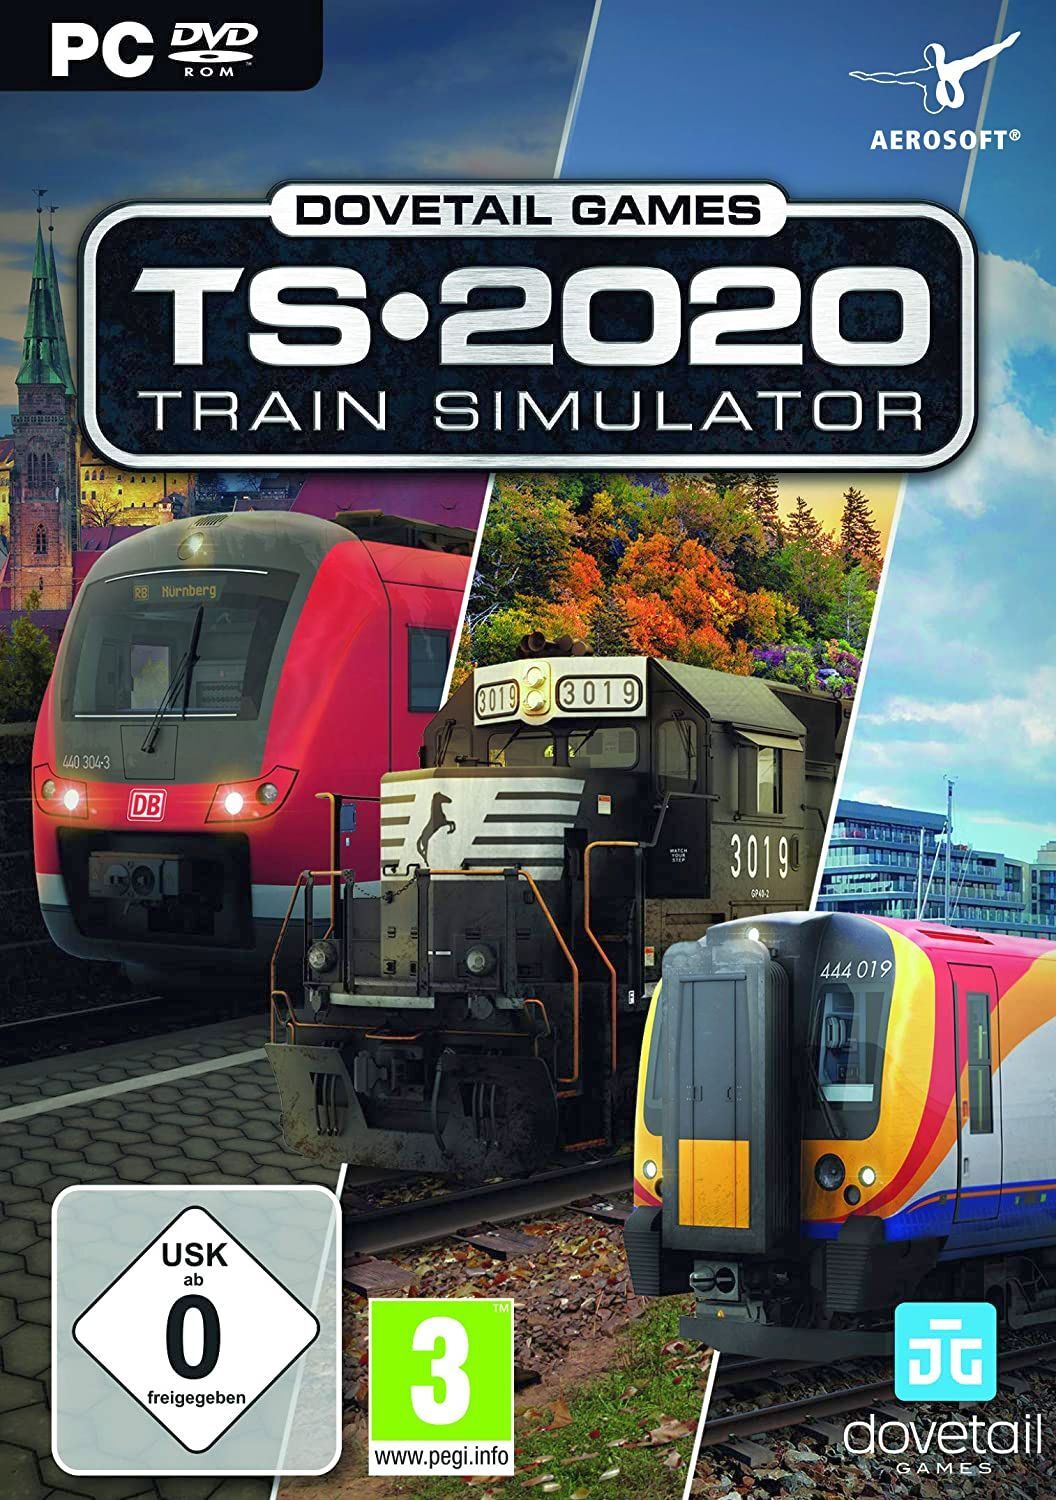 Aerosoft - Train Simulator TS 2020 [DVD] [PC] (D)